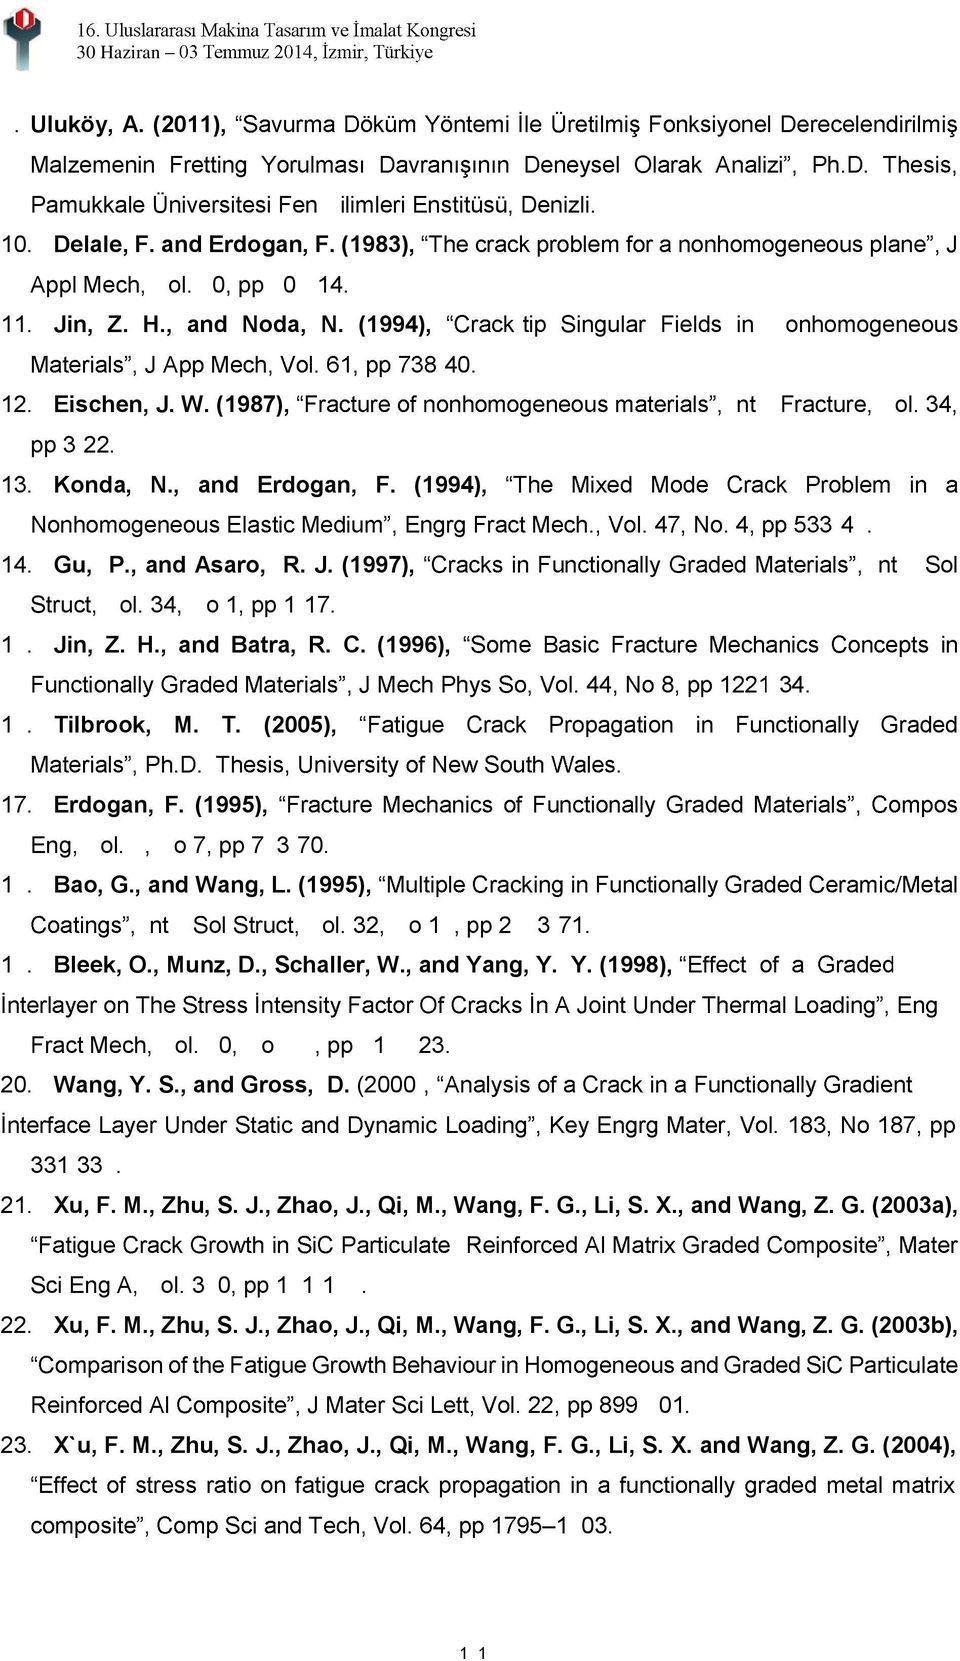 34, No 1, pp 117. 15. Jin, Z. H., and Batra, R. C. (1996), 34. 16. Tilbrook, M. T. (2005), Fatigue Crack Propagation in Functionally Graded 17. Erdogan, F. (1995), Eng, Vol. 5, No 7, pp 75370. 18.